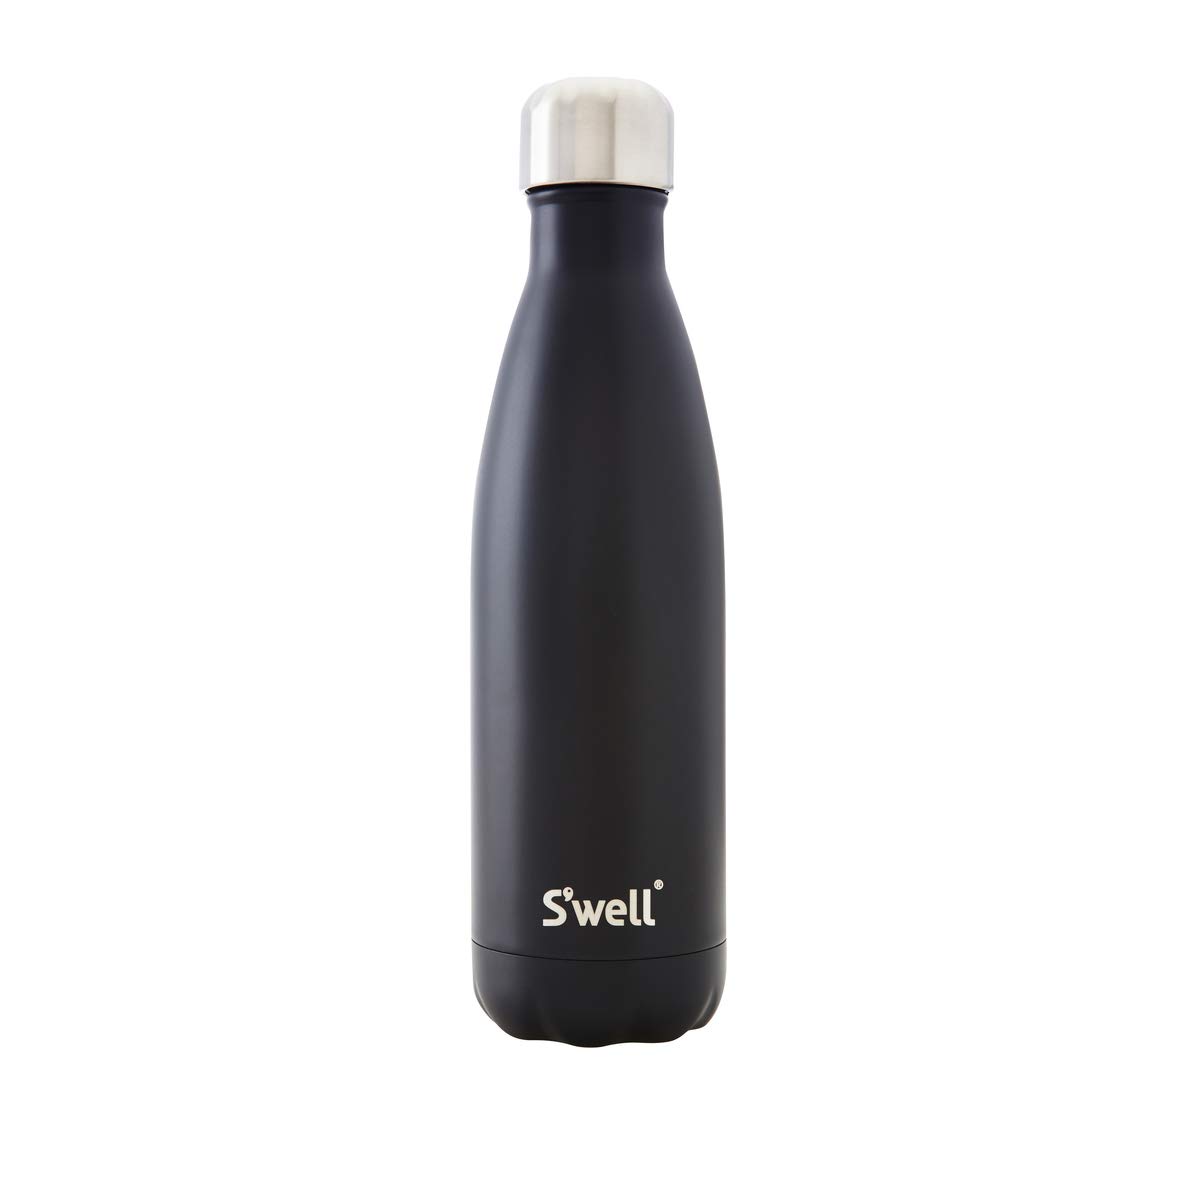 Swell 17 oz London Chimney Bottle